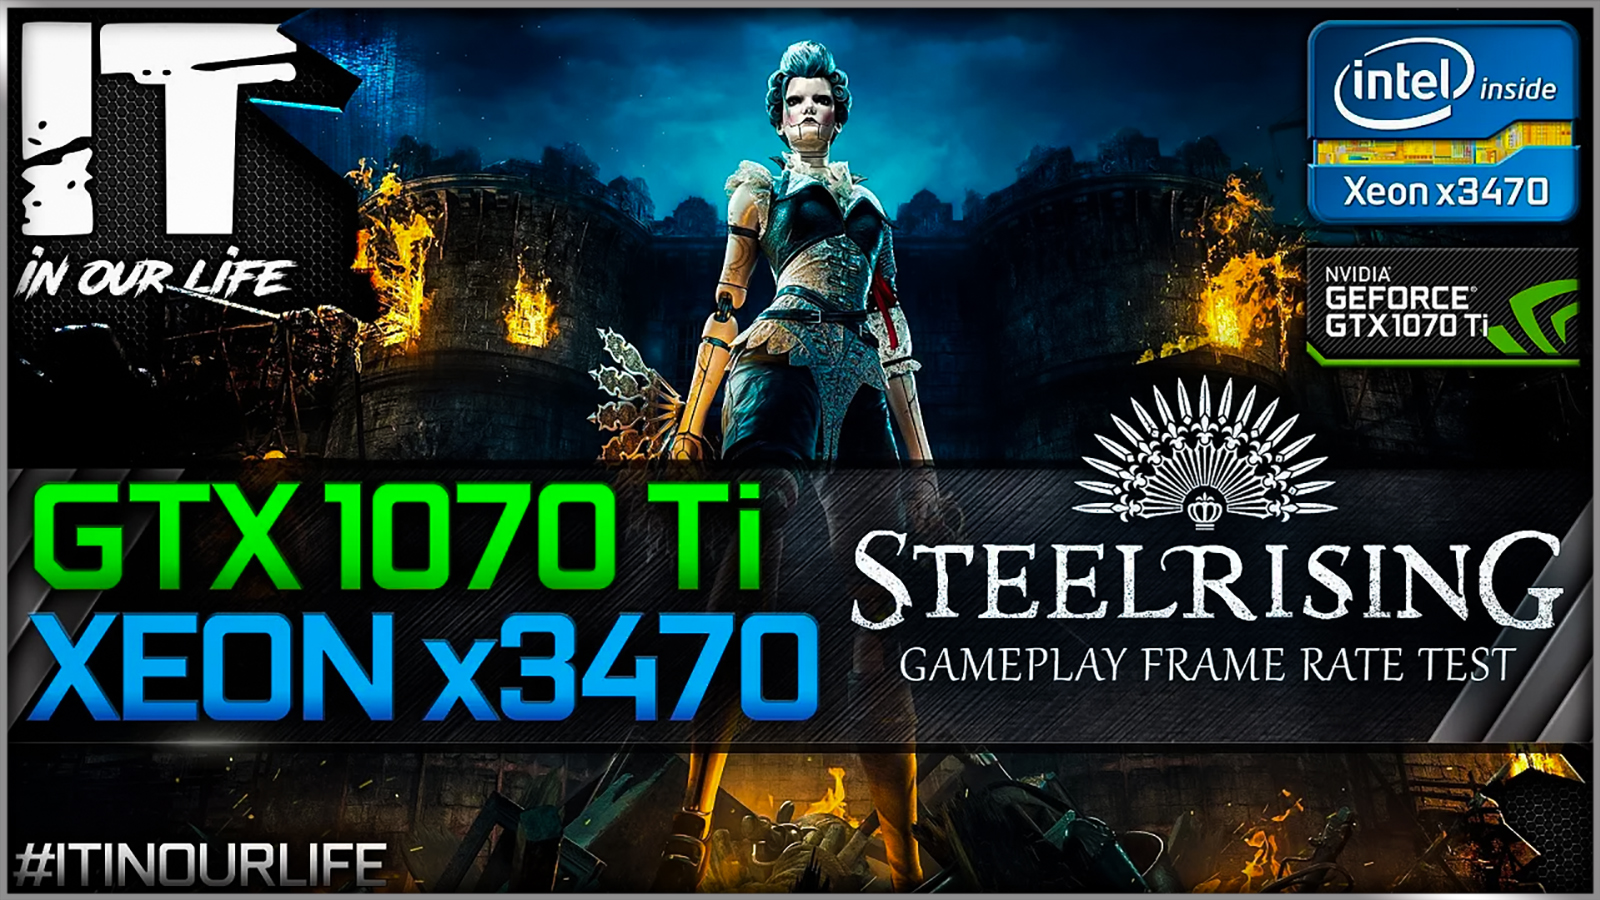 Steelrising - Xeon x3470 + GTX 1070 Ti | Gameplay | Frame Rate Test | 1080p